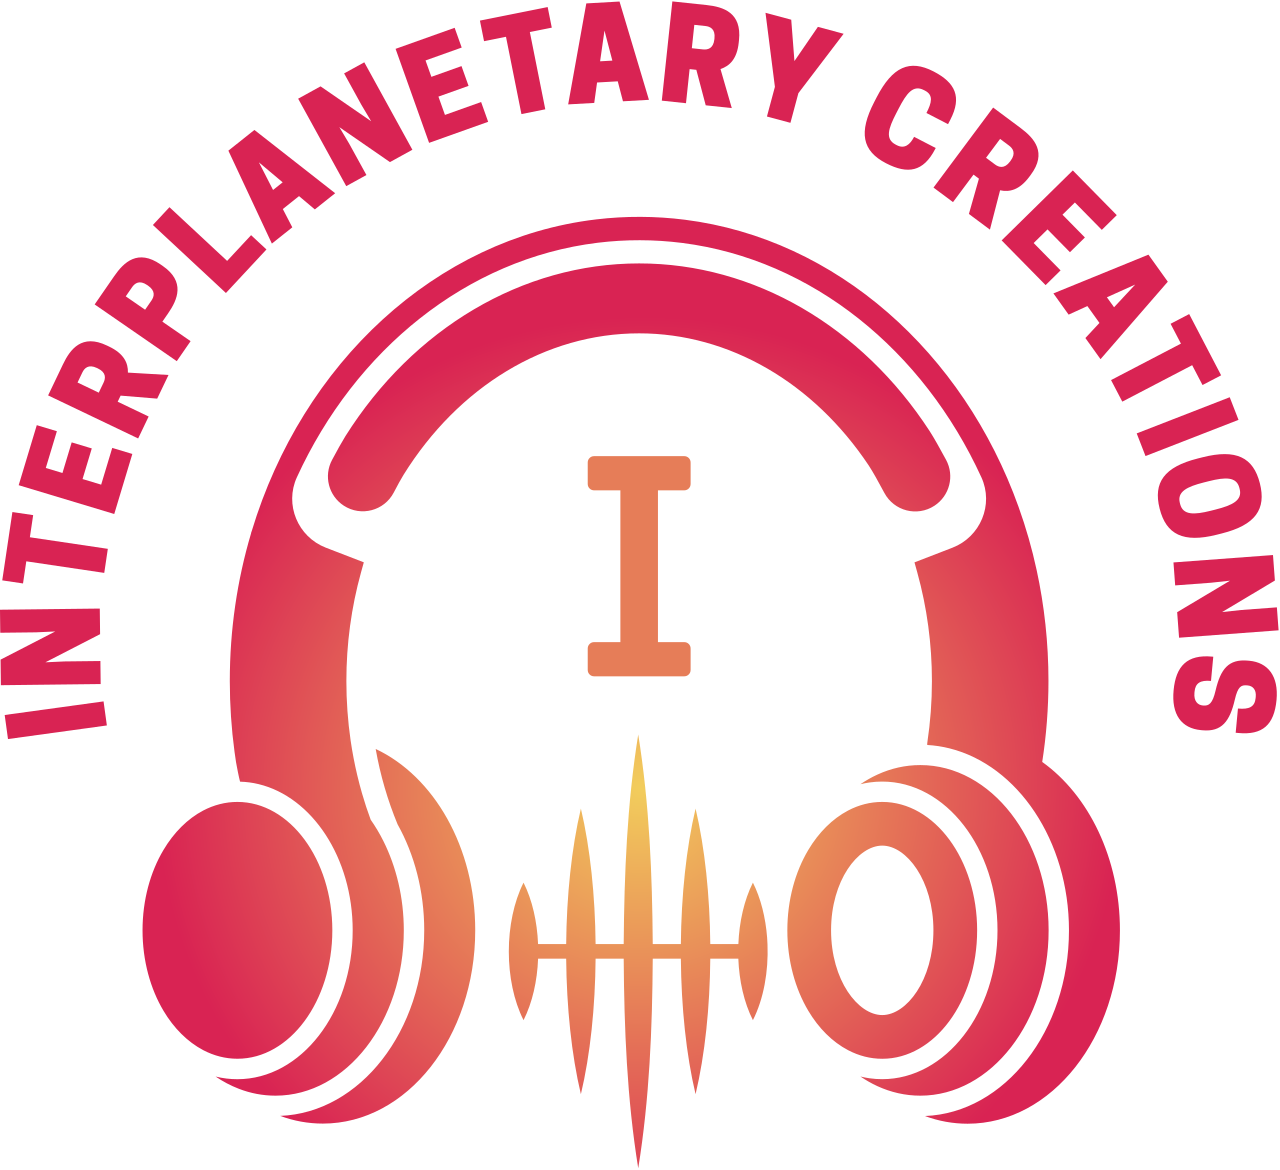 Interplanetary creations's logo